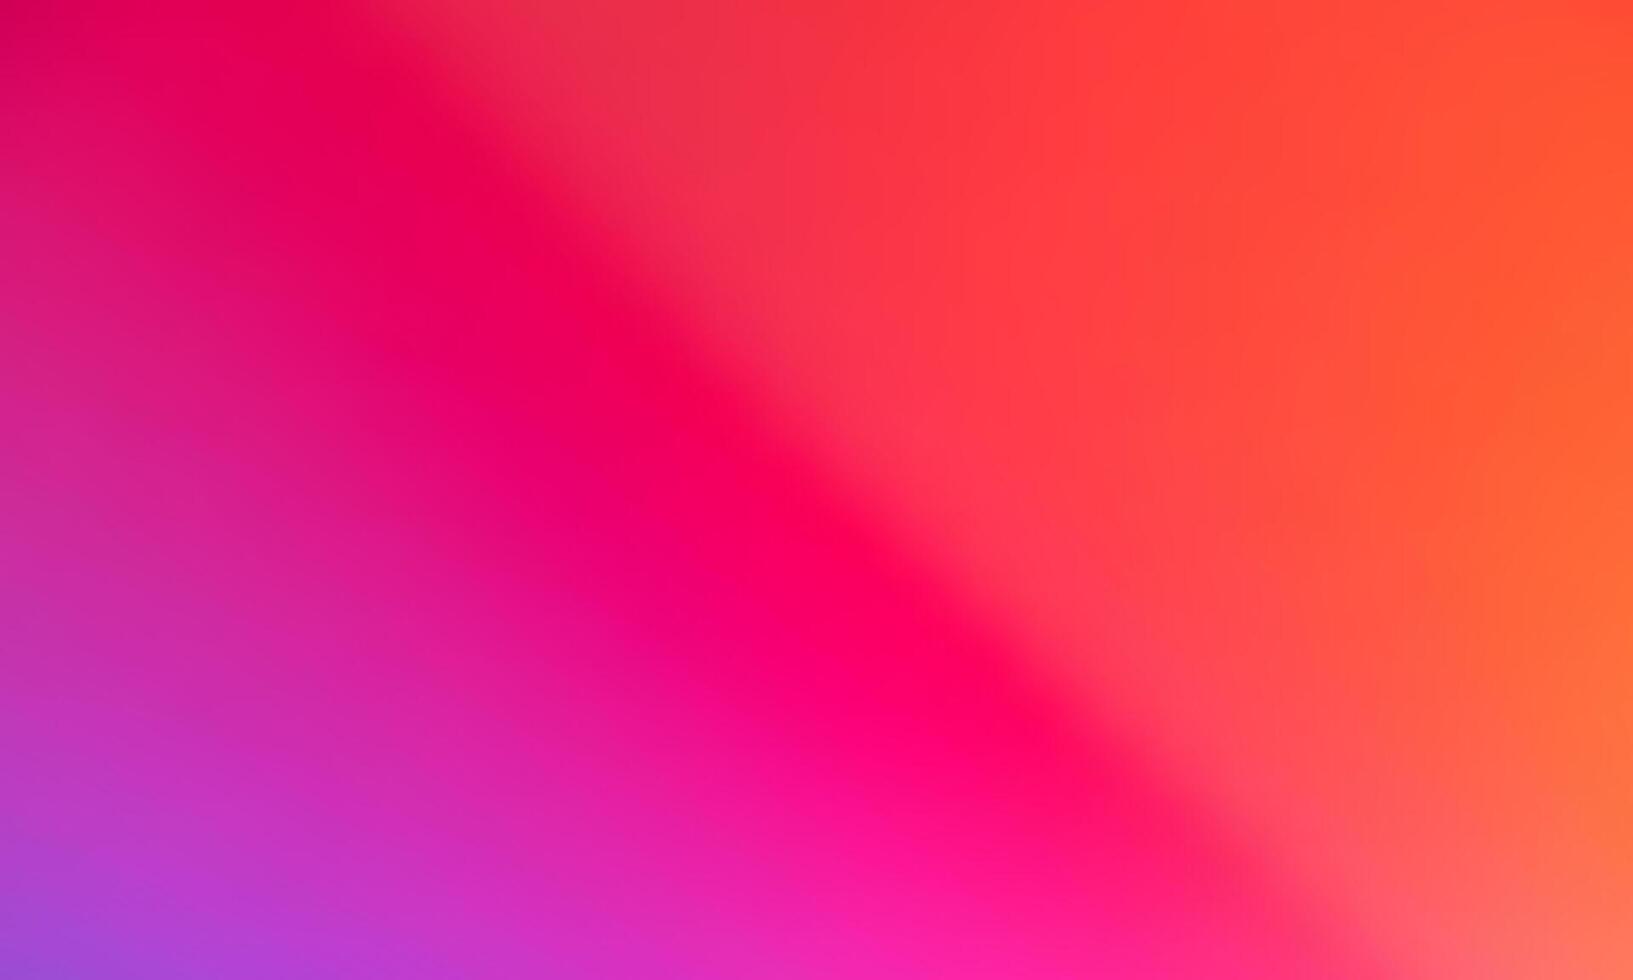 Colorful Gradient Blurred Wallpaper Artistic Design vector